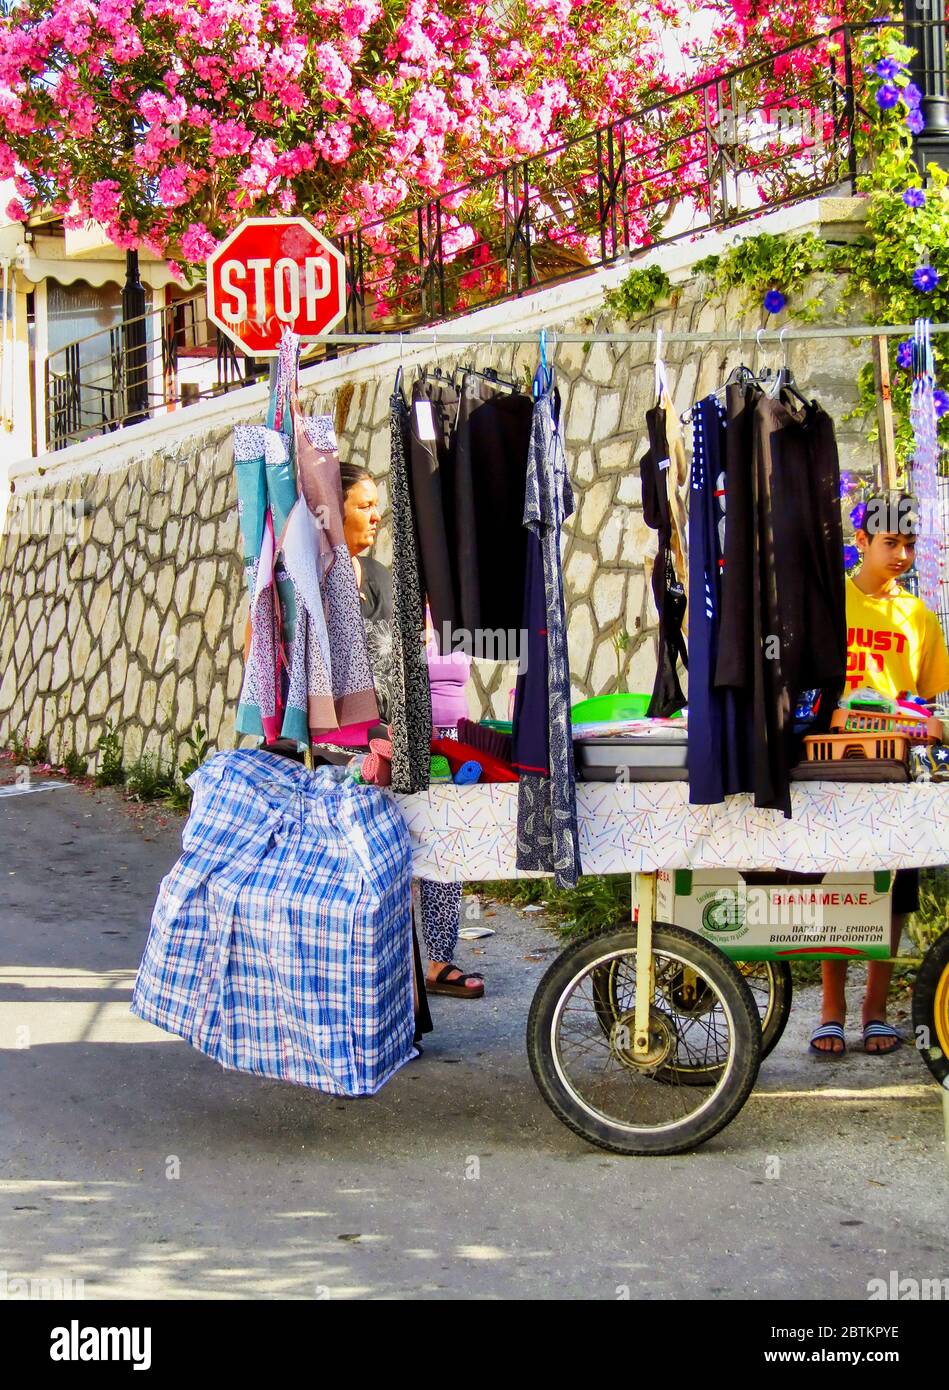 https://c8.alamy.com/comp/2BTKPYE/old-fashioned-street-vender-with-mobile-cart-and-clothing-crete-greece-2BTKPYE.jpg